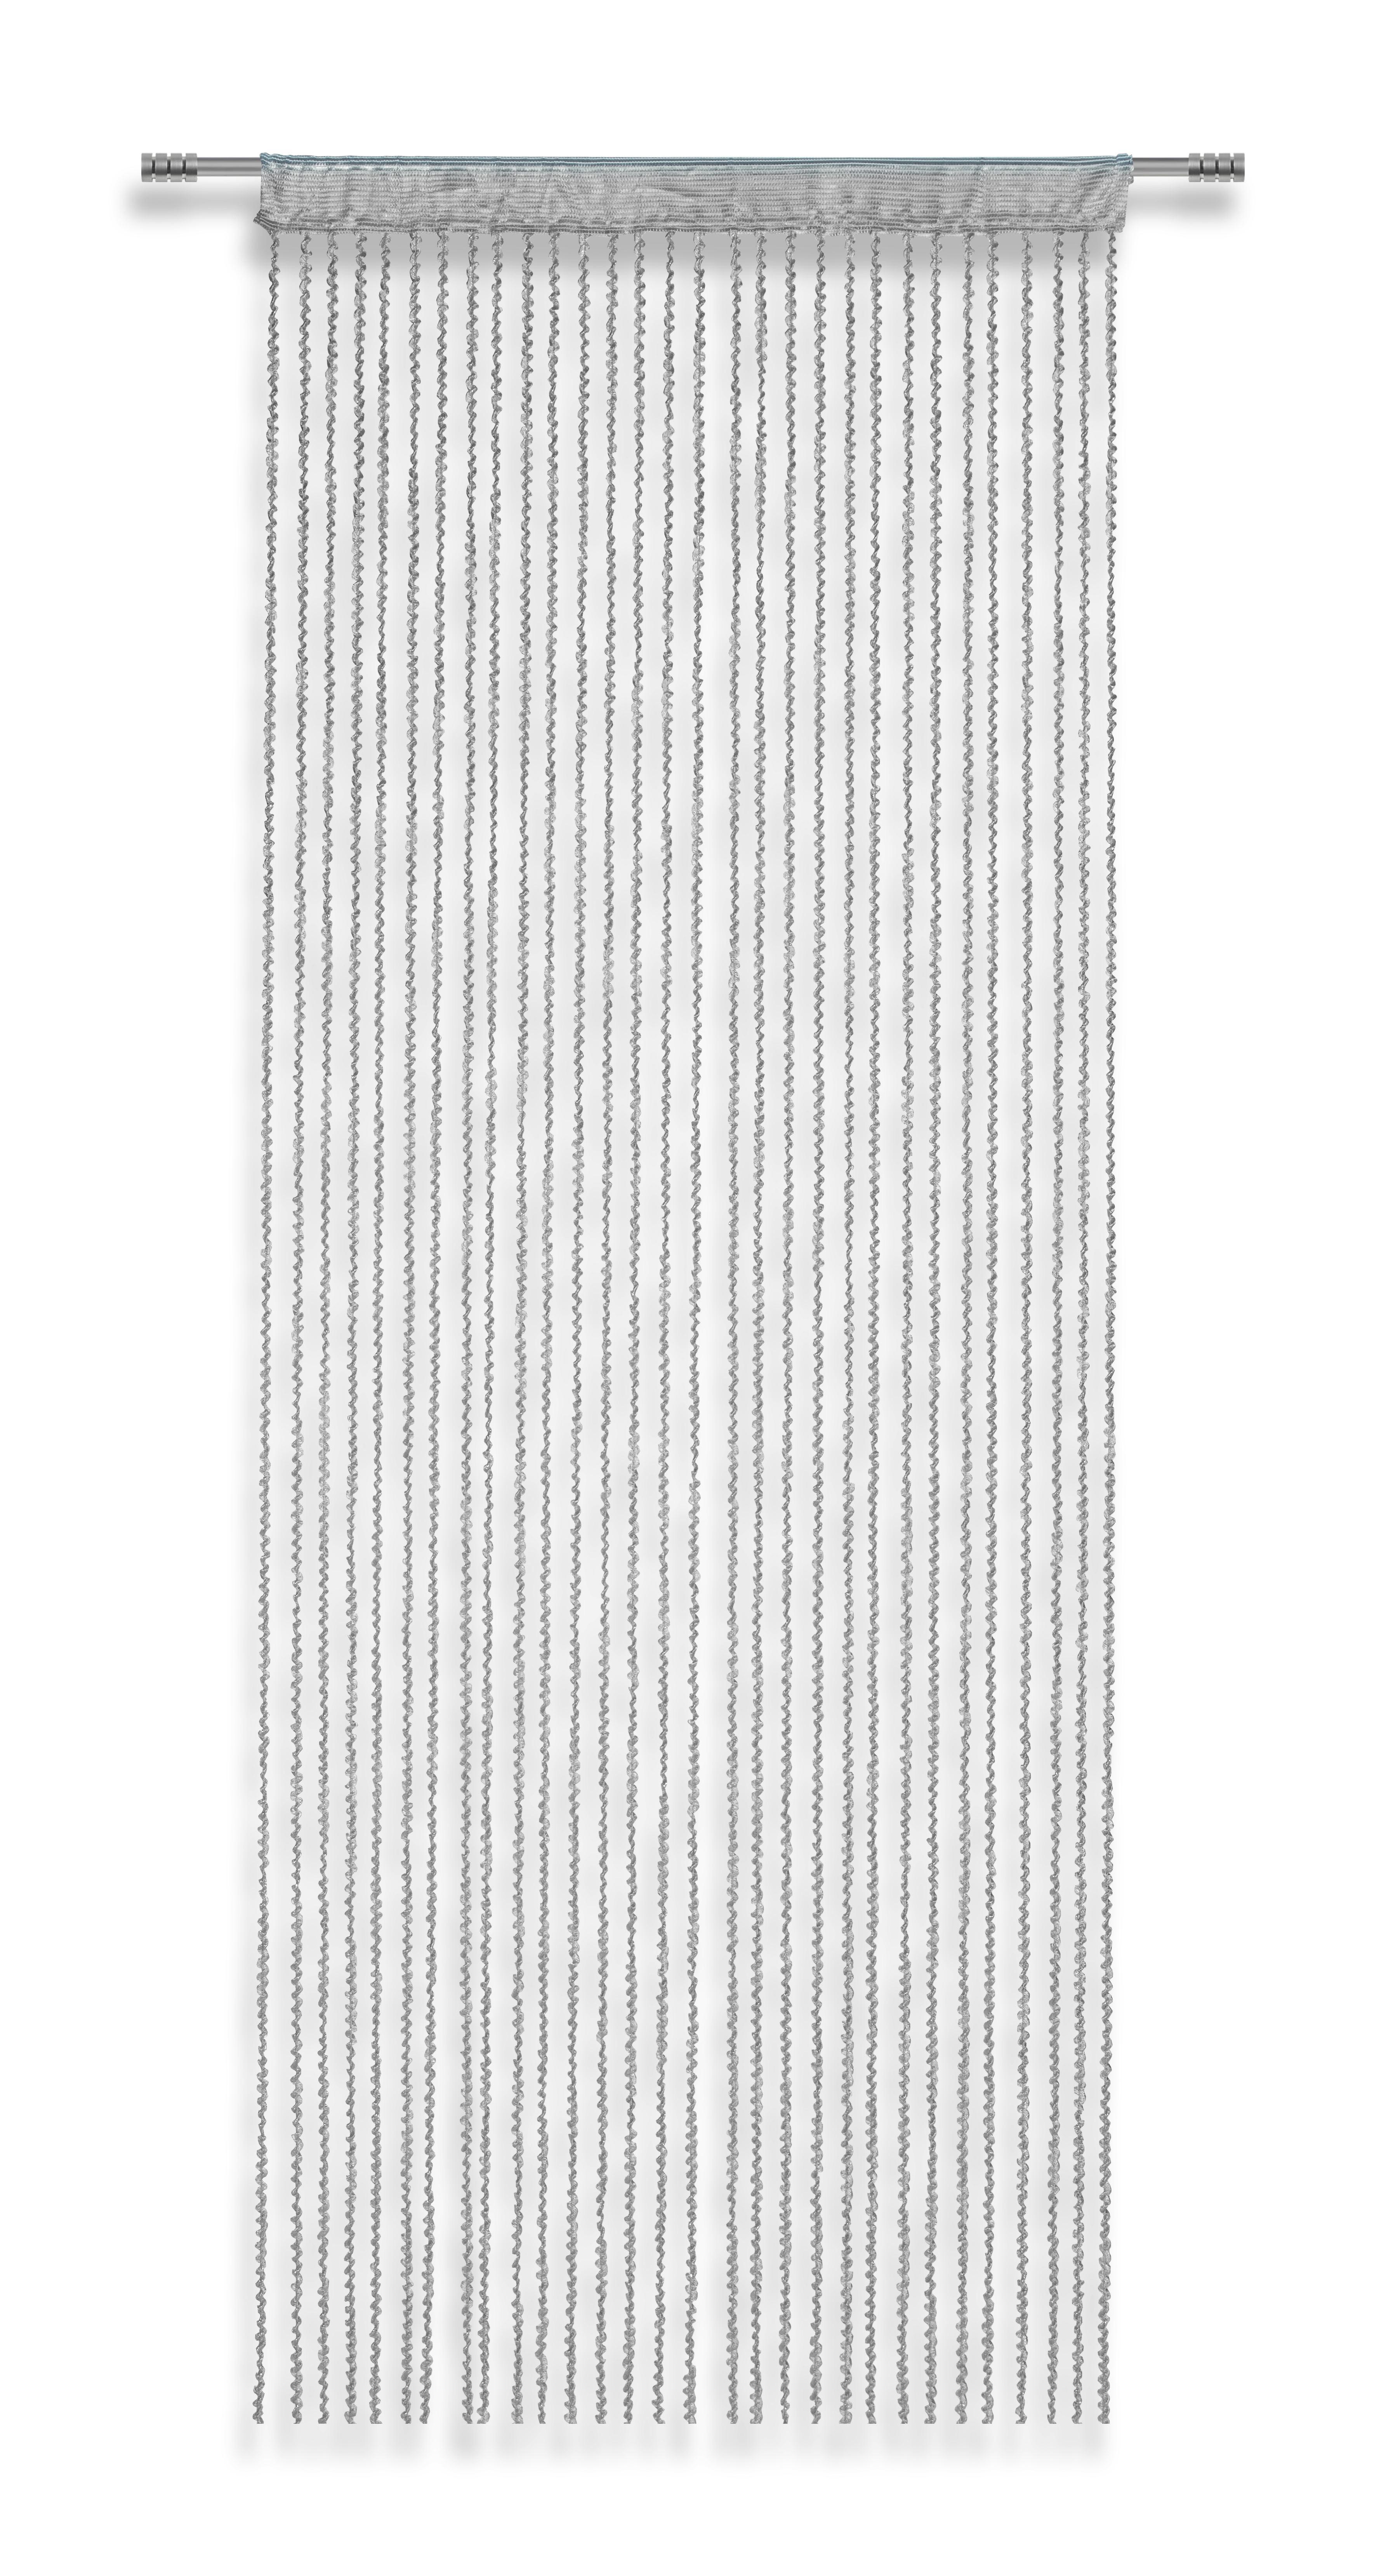 Fadenvorhang Stangendurchzug Renata B: 90cm, Grau - Grau, MODERN, Textil (90/245cm) - Luca Bessoni